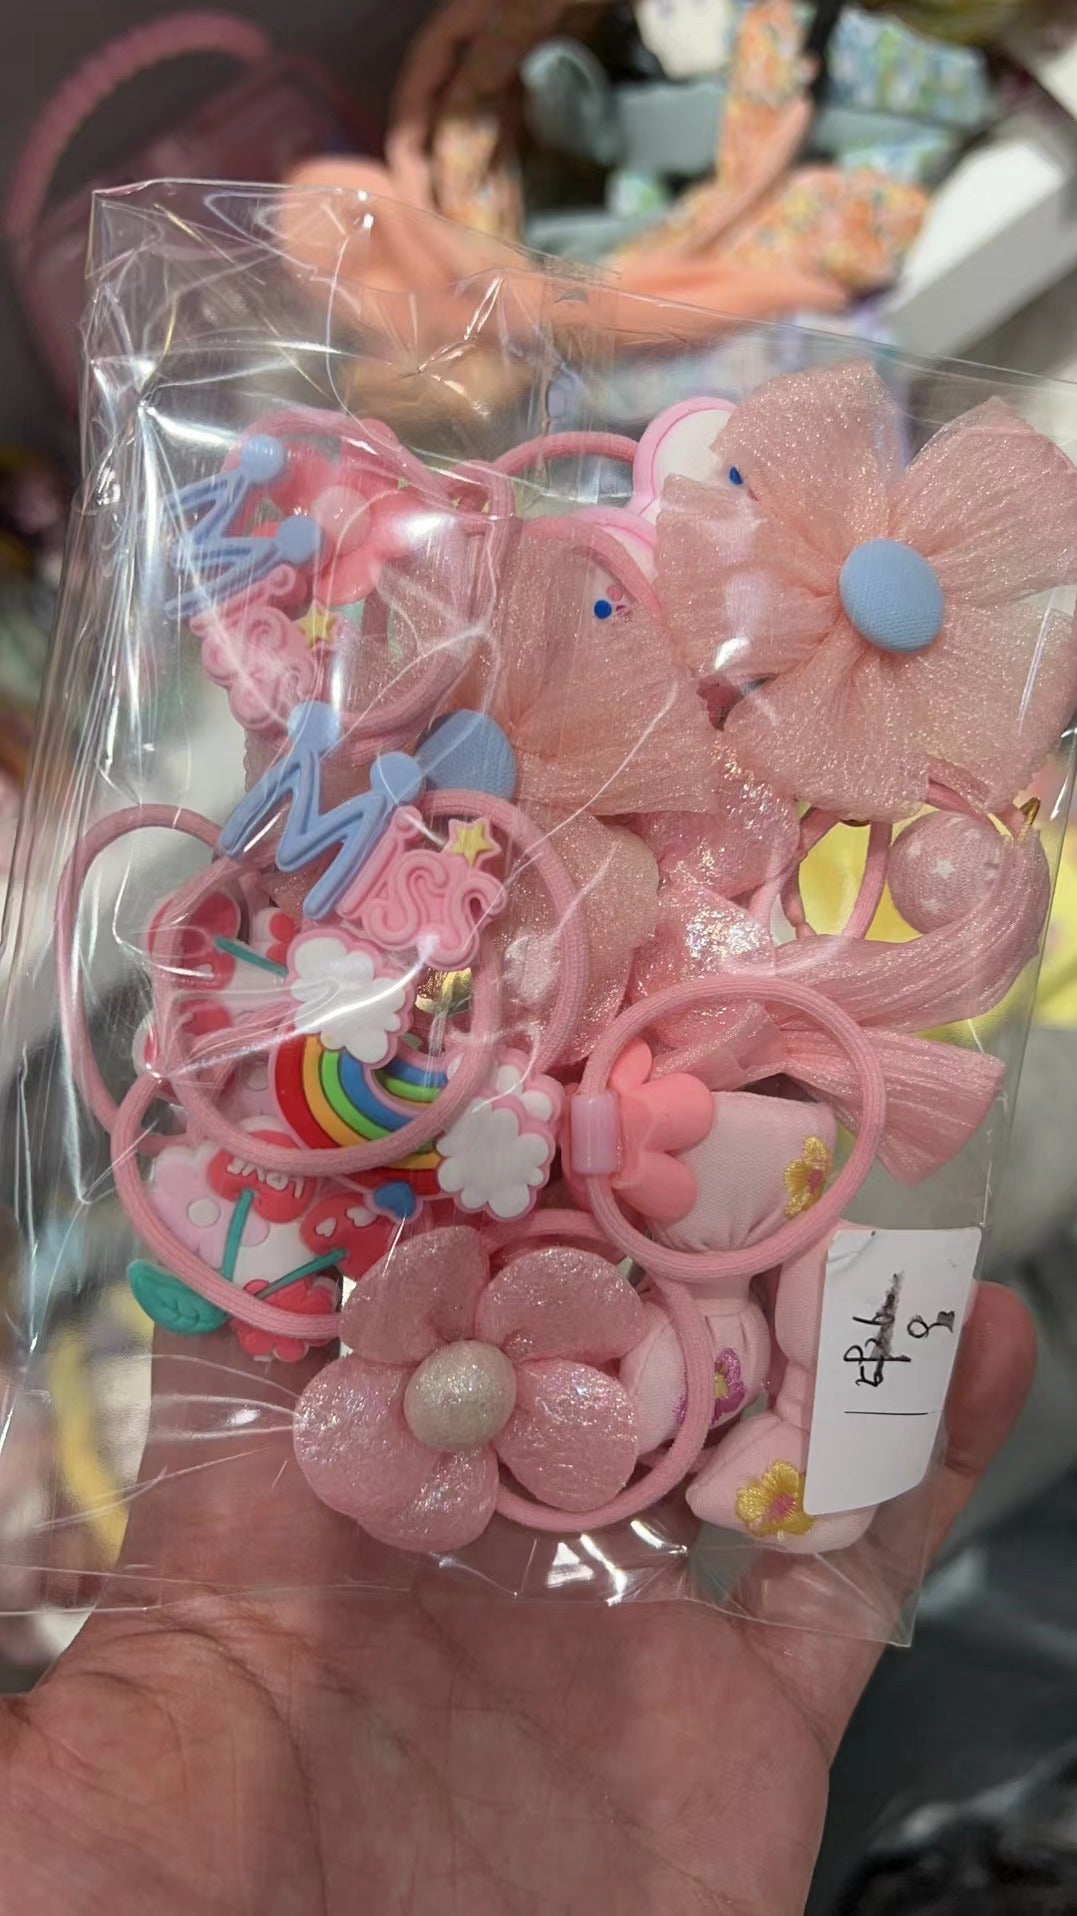 【6】Hair accessories 1bag of colorful hair clip